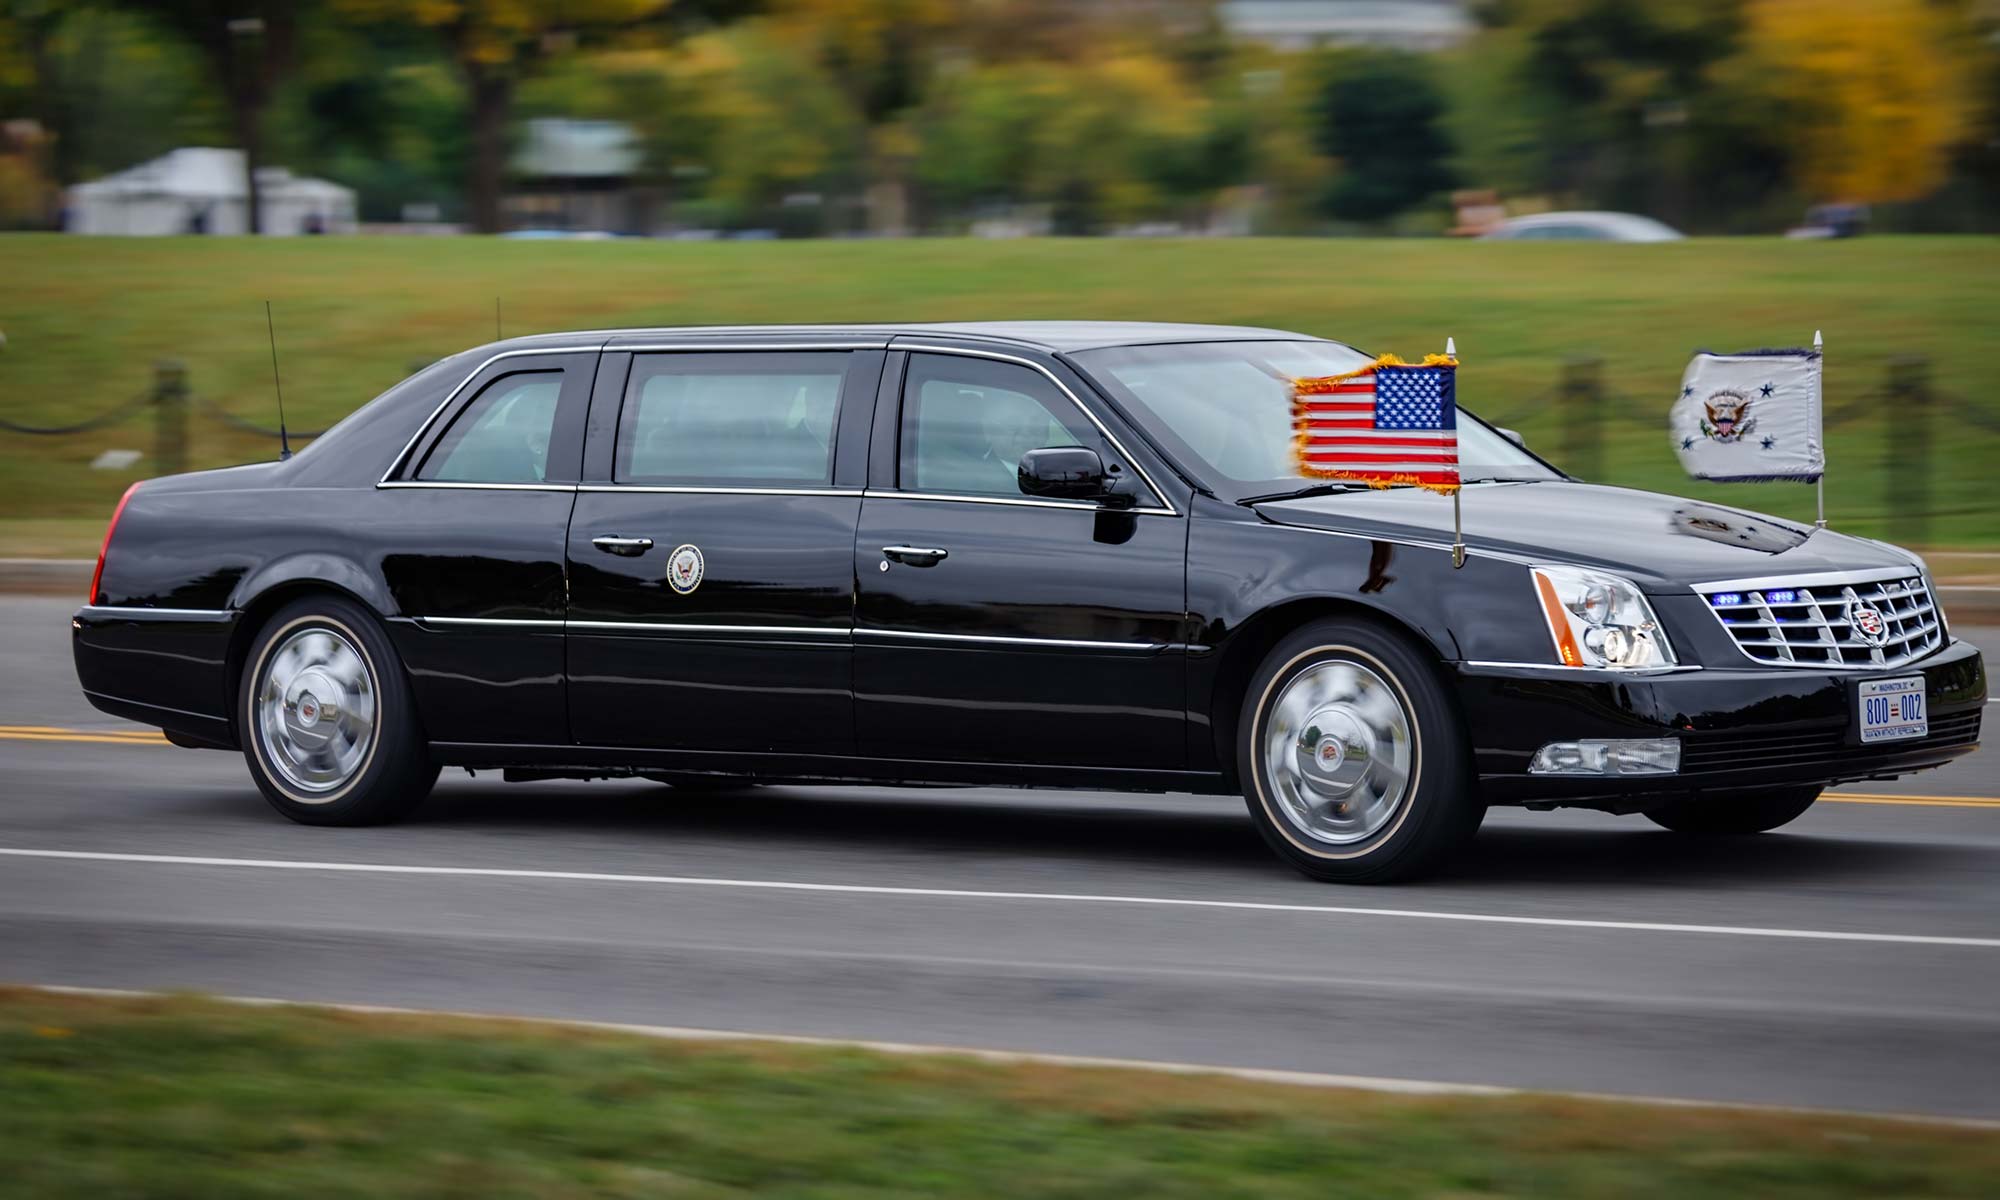 The Presidential limo nicknamed 